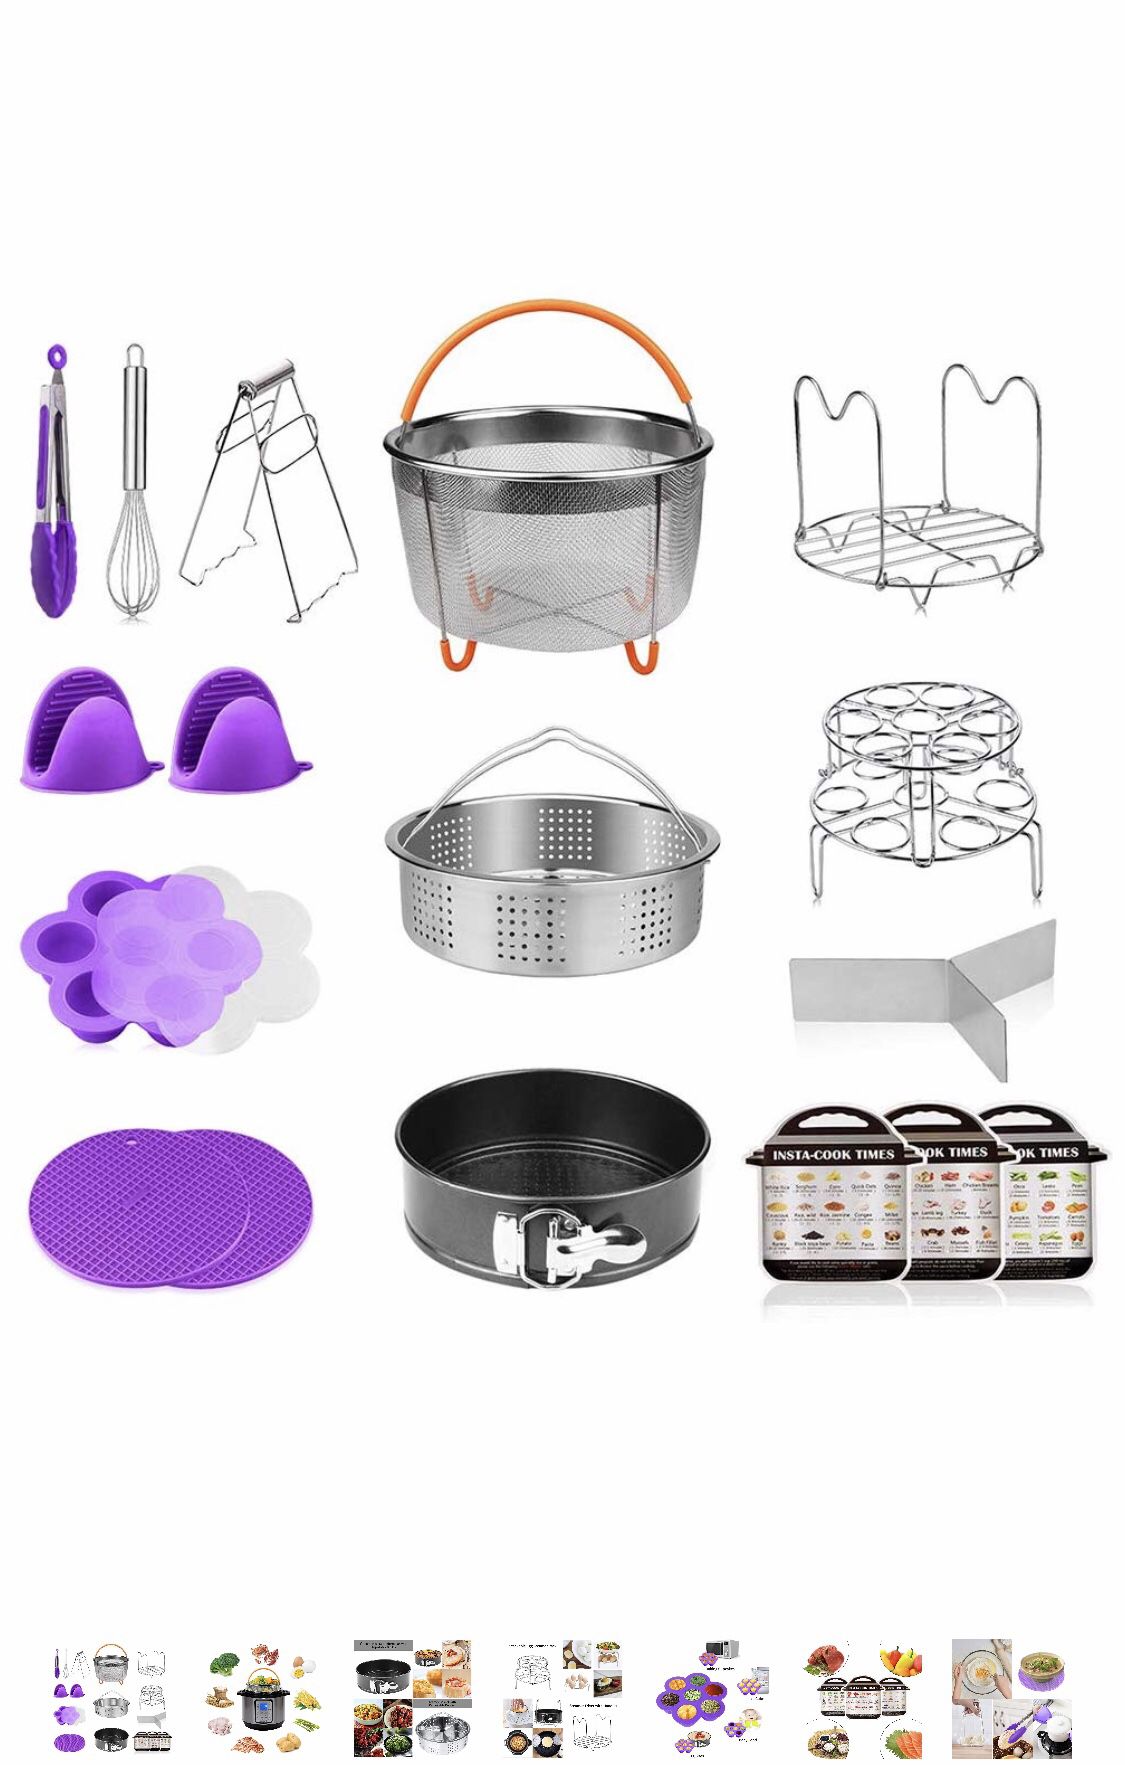 18-Pieces Pressure Cooker Accessories Set Compatible with Instant Pot 5,6,8 Qt - 2 Steamer Baskets with Divider, Non-stick Springform Pan, Stackable